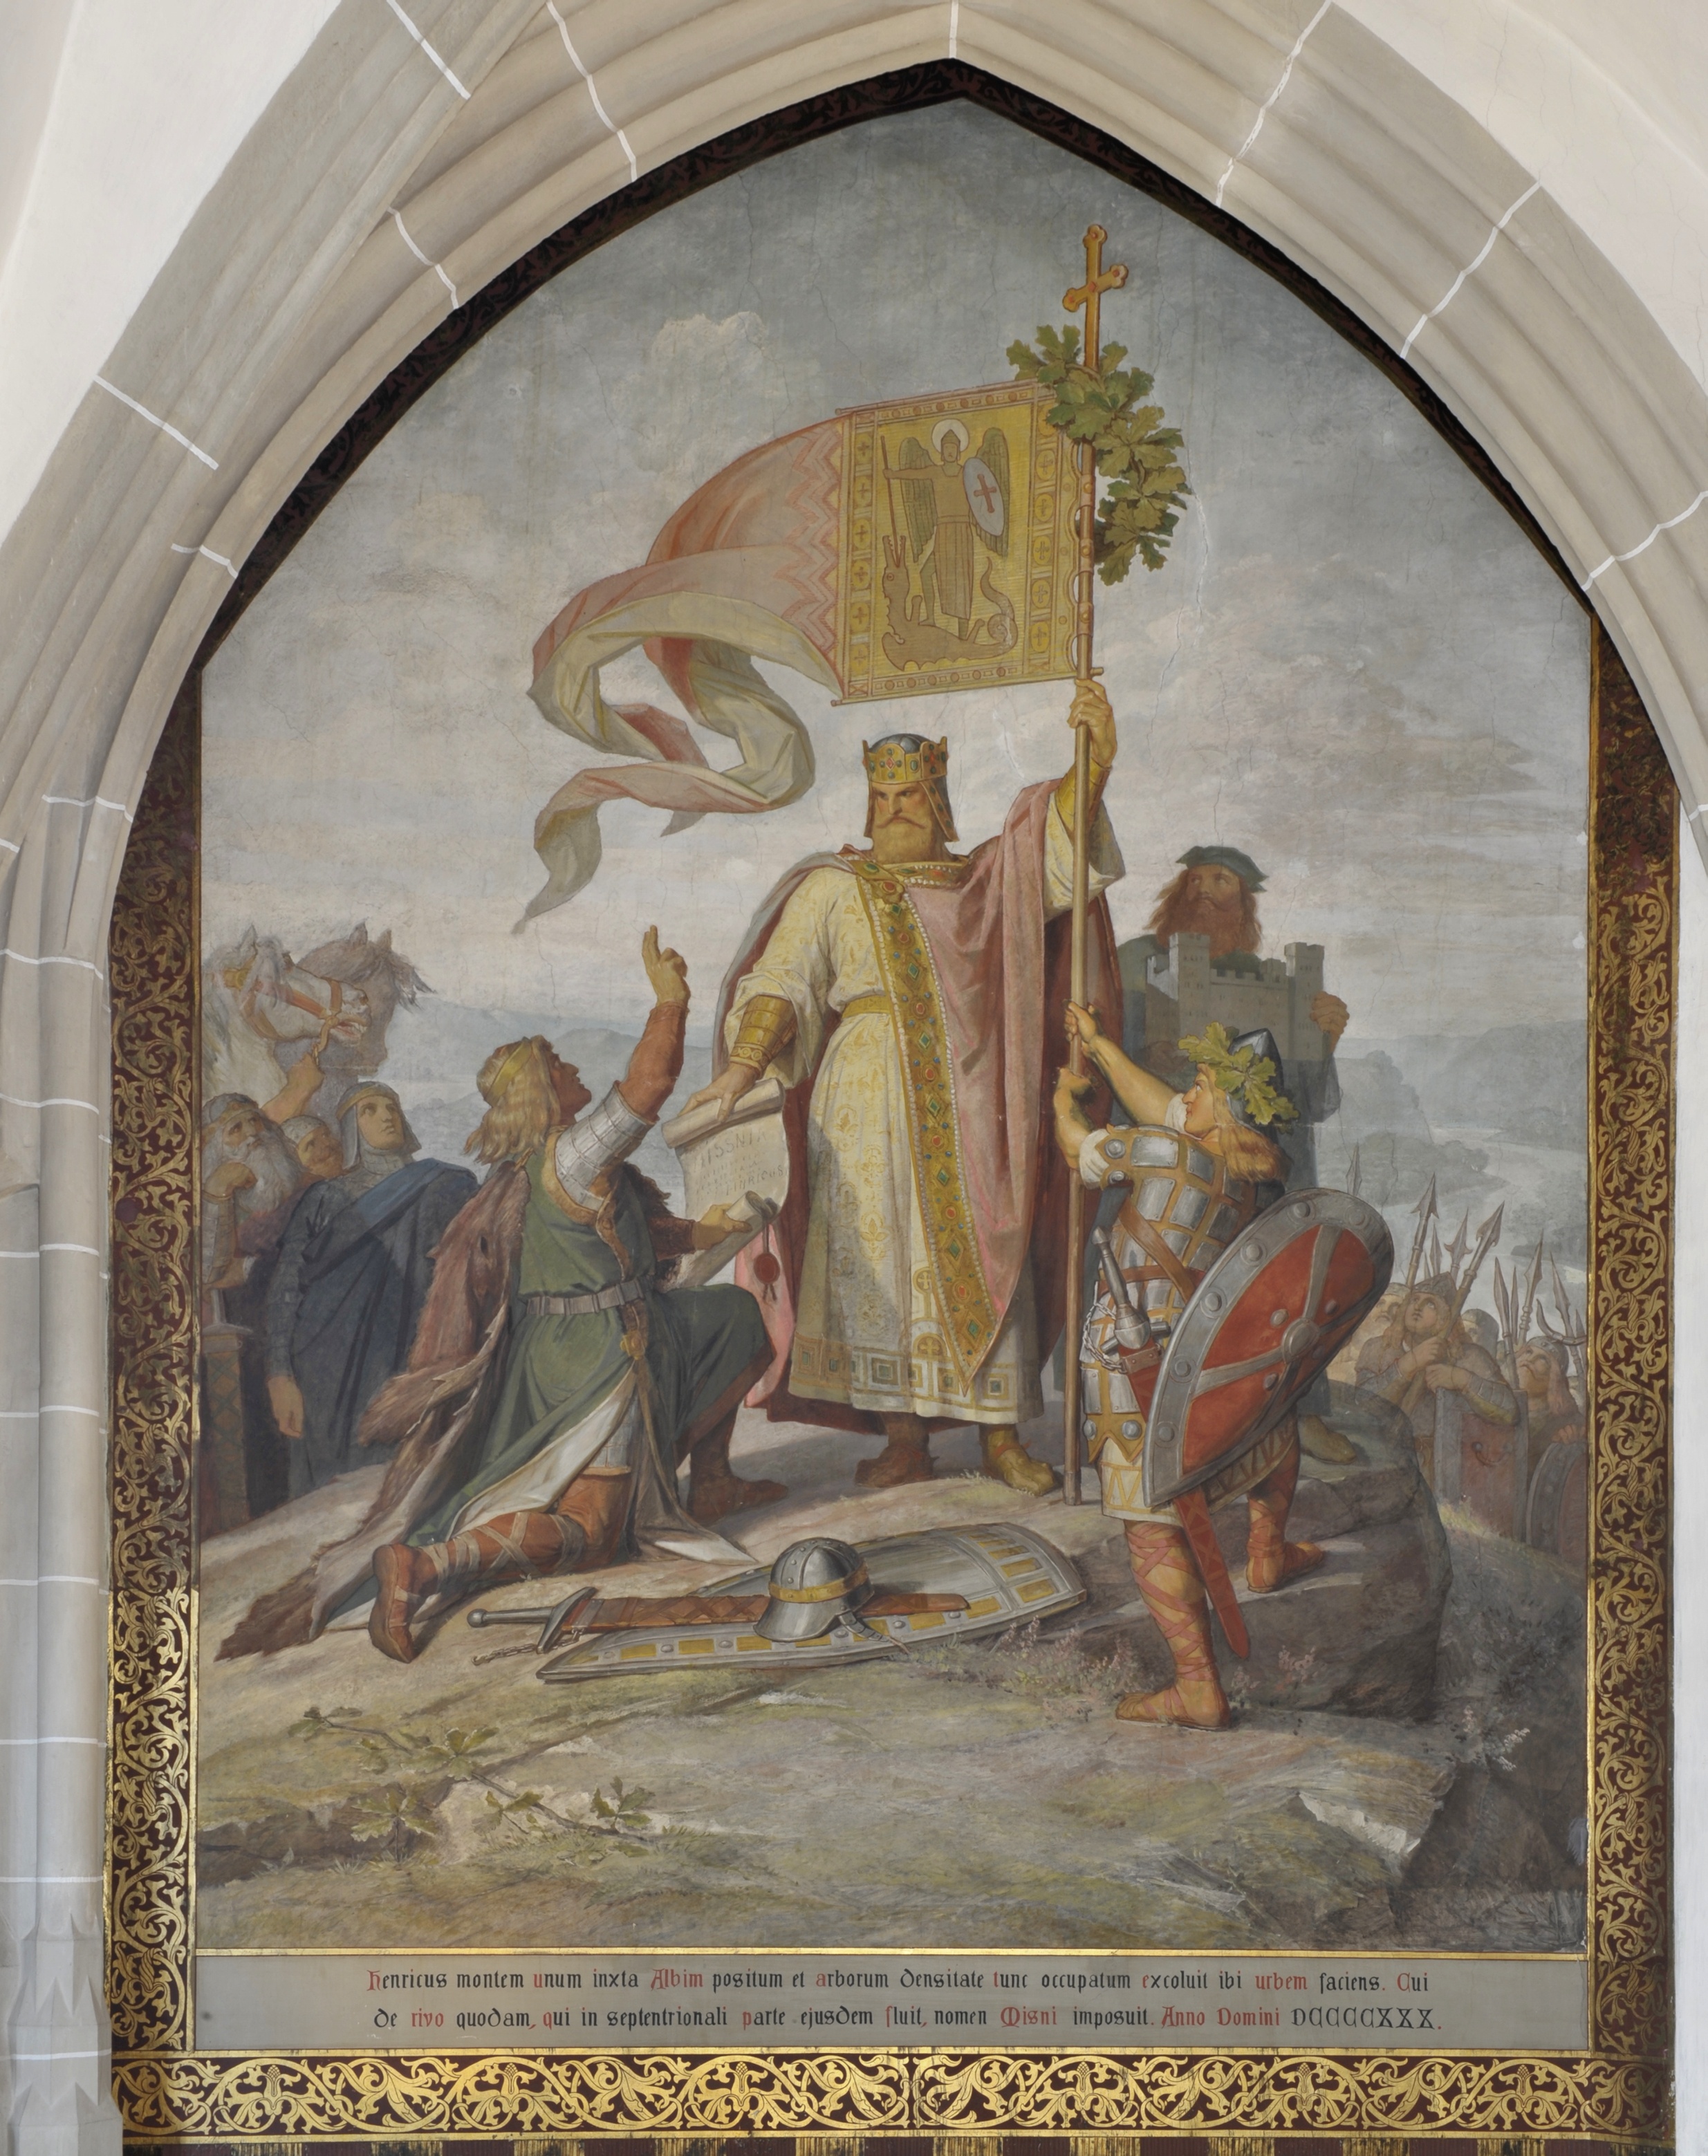 Wandbild:
"Gründung der Burg
Meißen durch König Heinrich I. im Jahr 929" (SBG gGmbH CC BY-NC-SA)